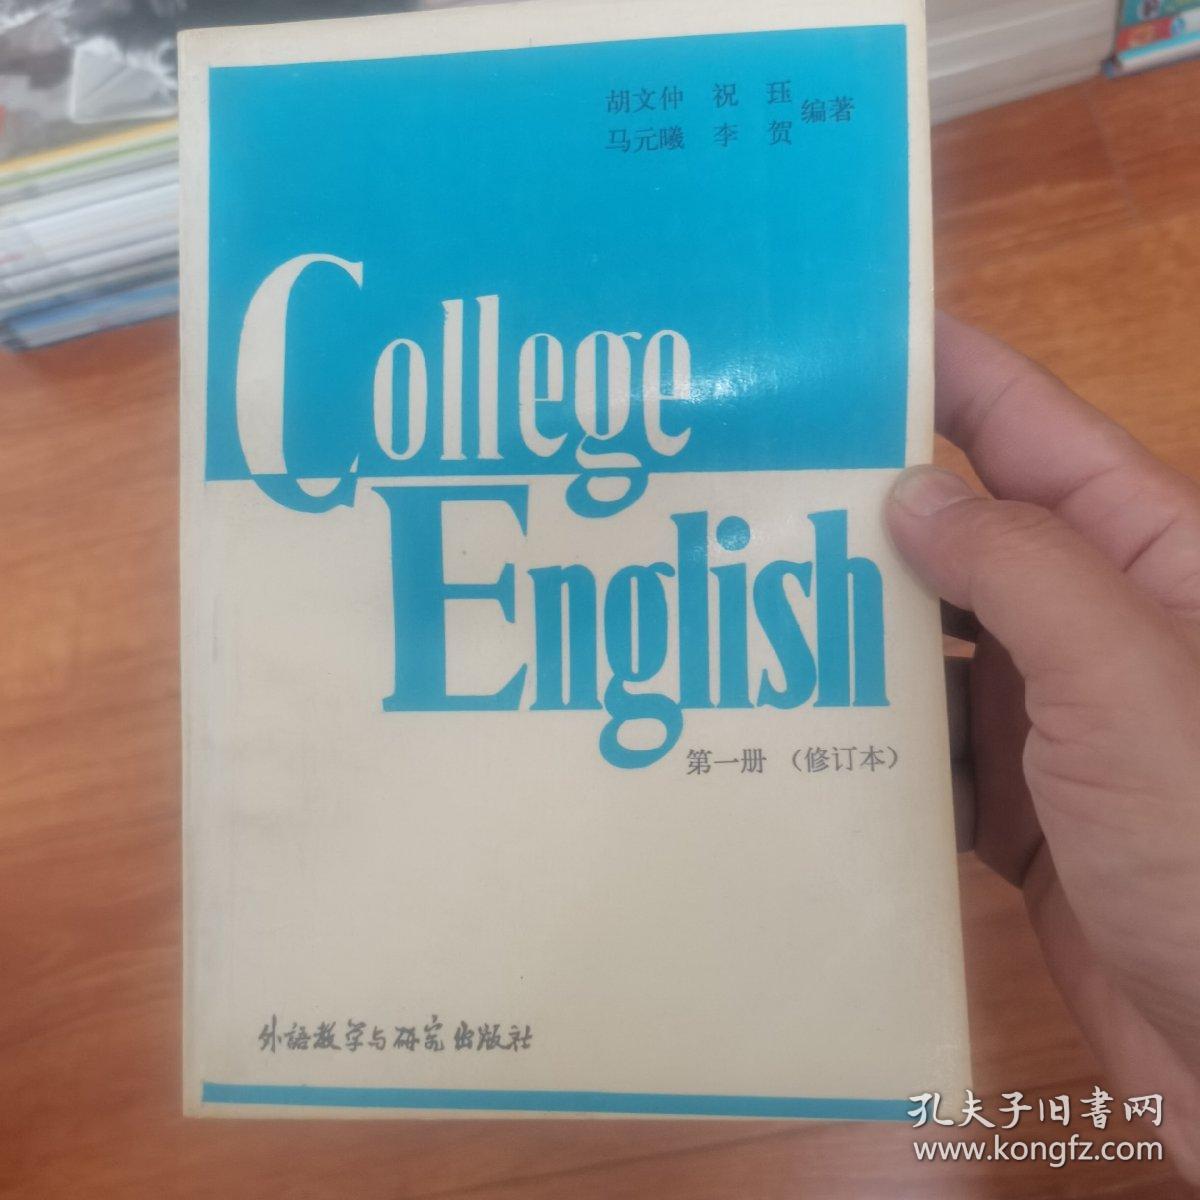 college English第一册第二册